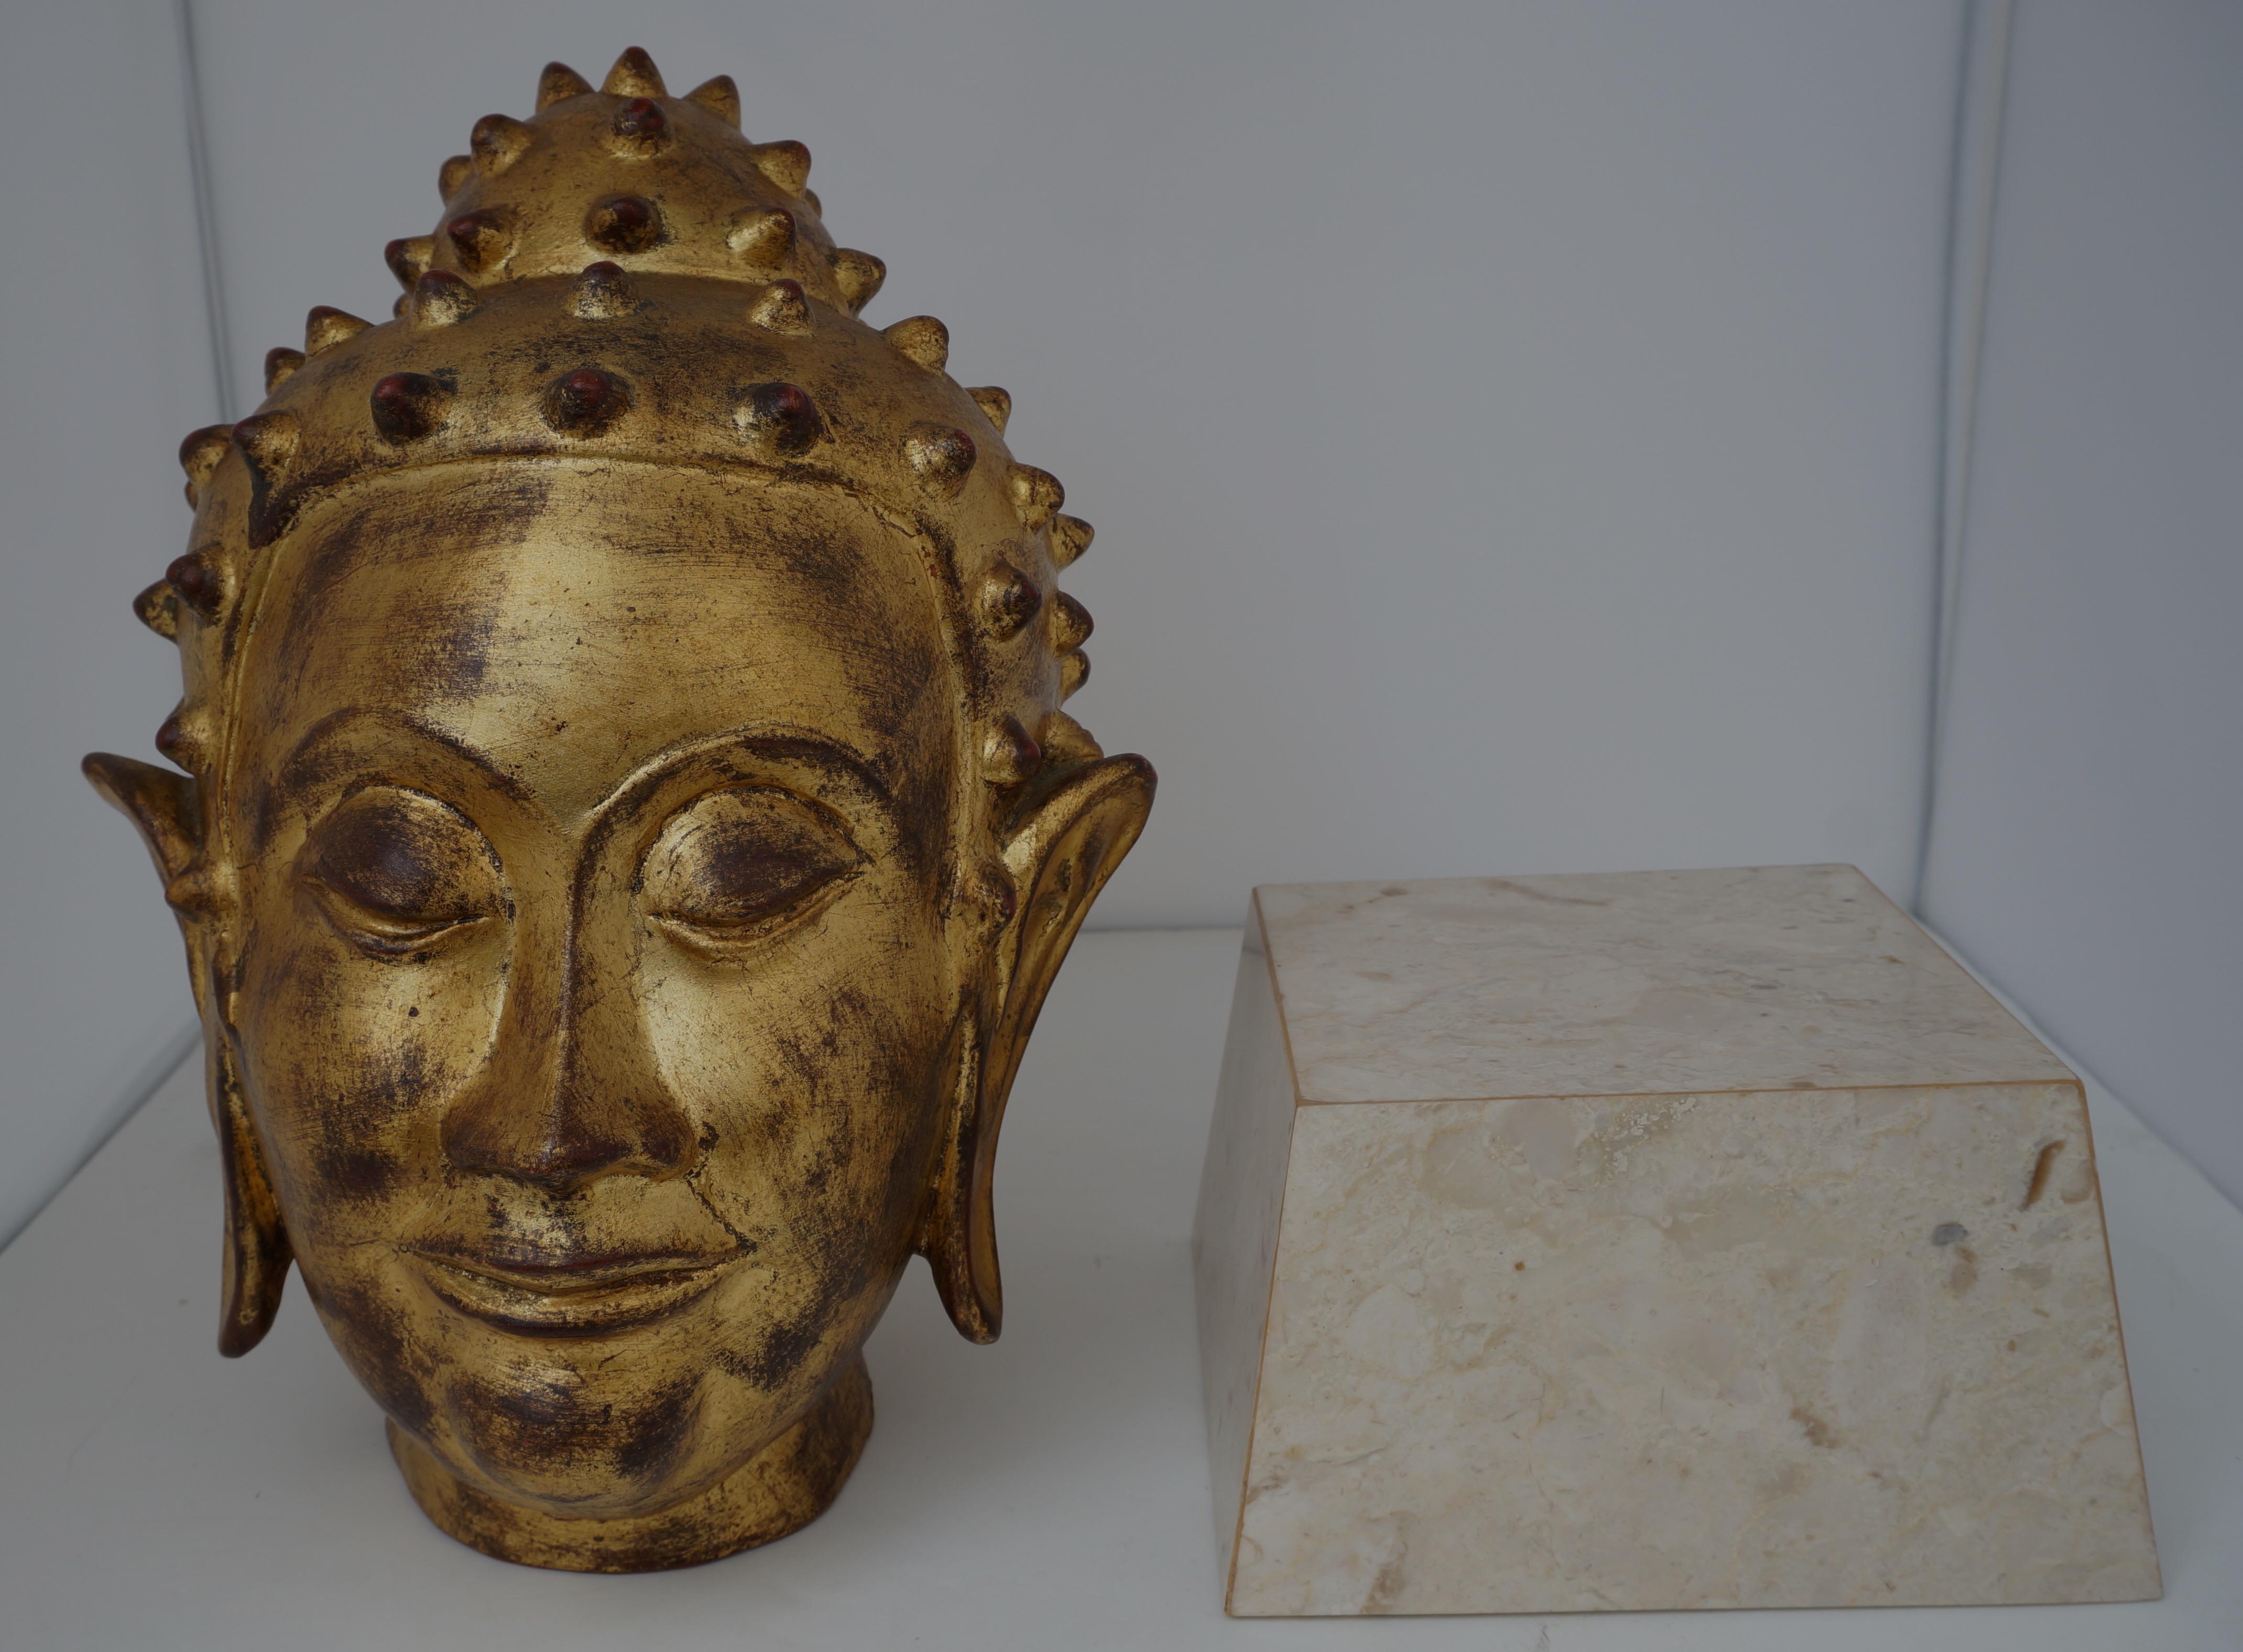 Polished Gold Leaf on Terracotta Buddha Head For Sale